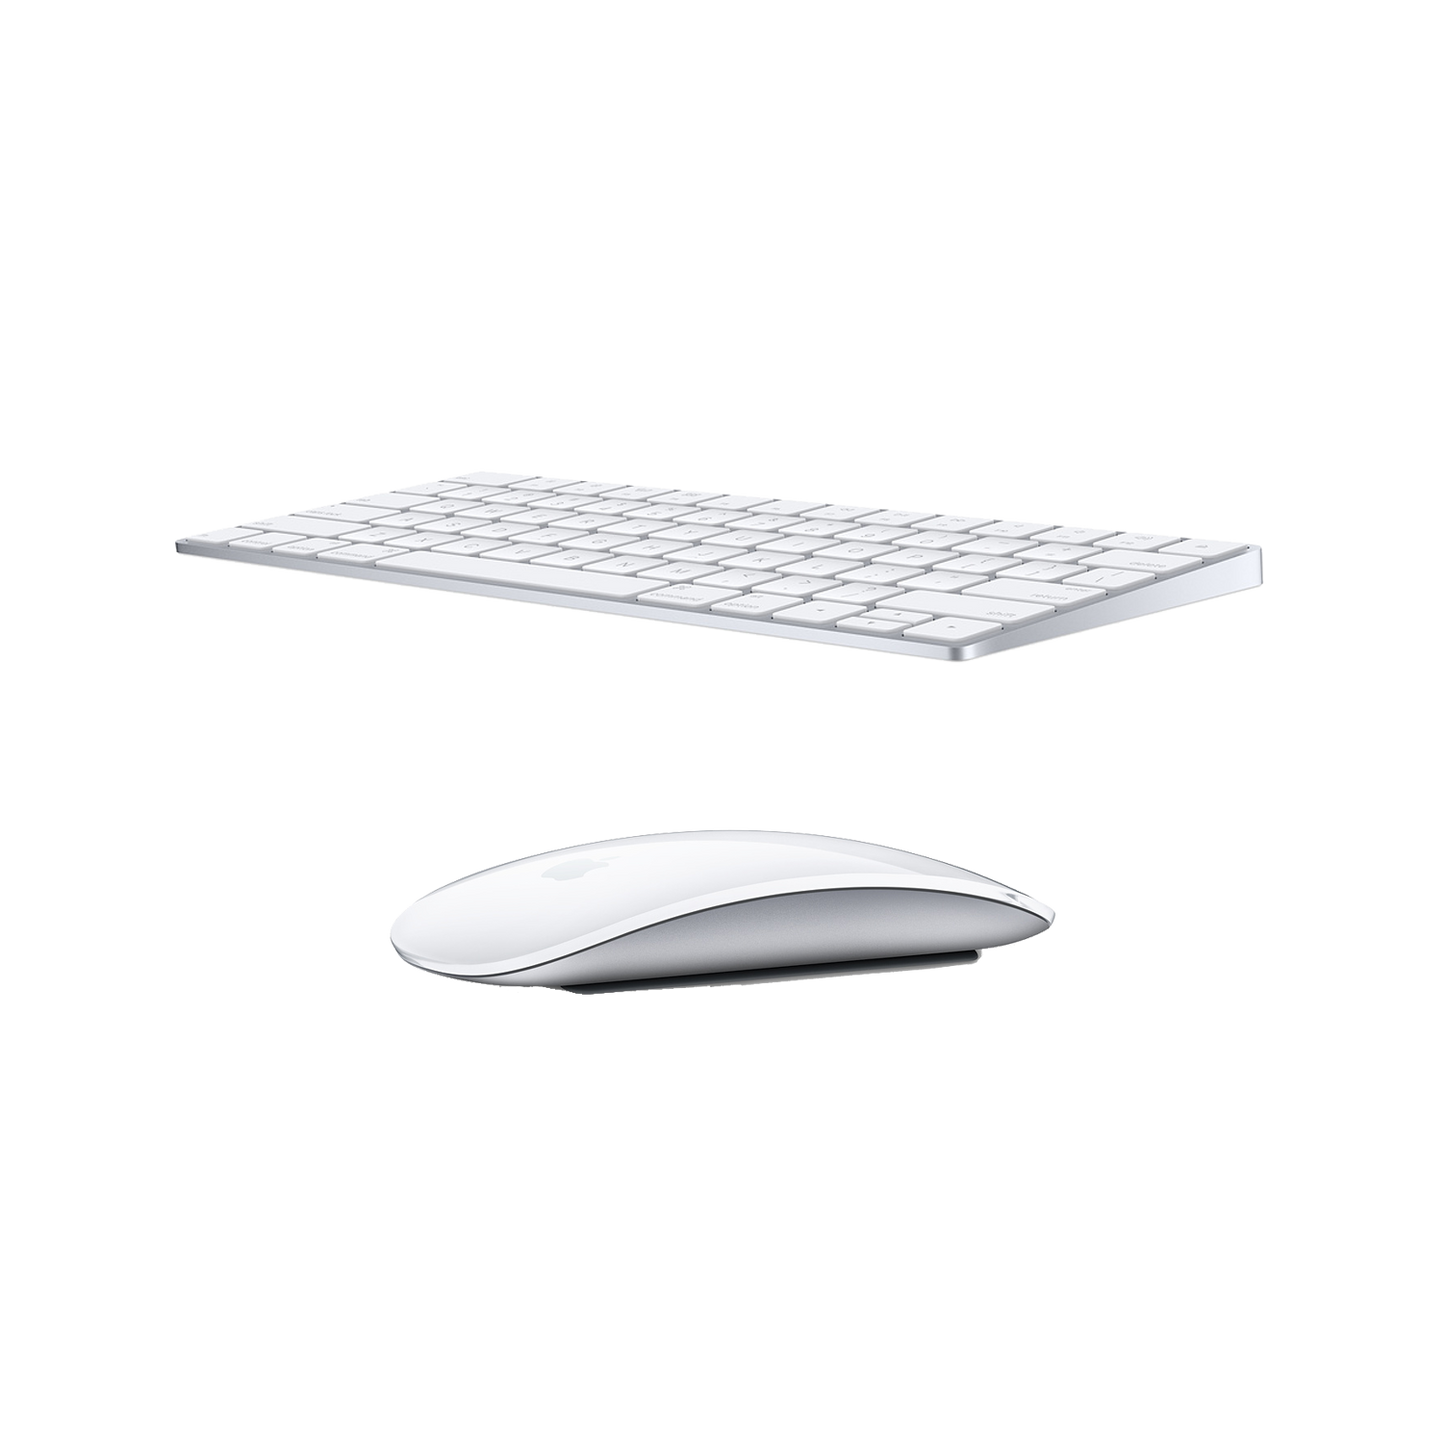 Refurbished Magic Keyboard en Mouse 2 + lightningcable - test-product-media-liquid1